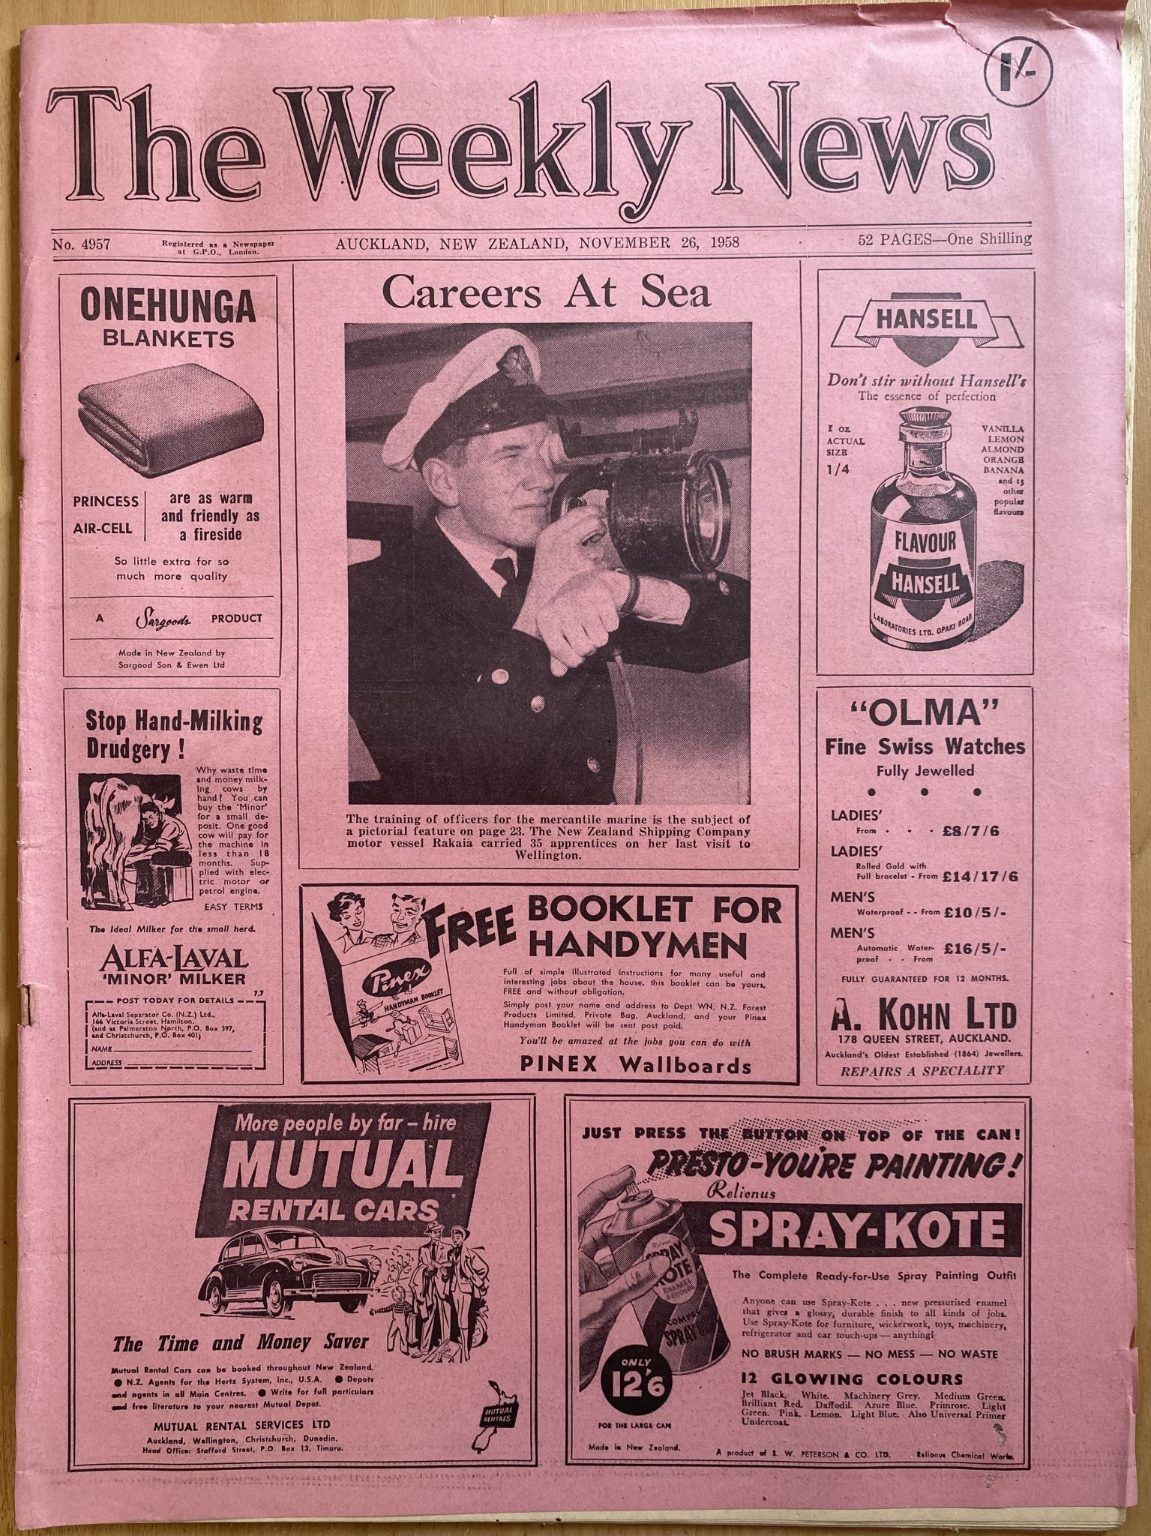 OLD NEWSPAPER: The Weekly News, No. 4957, 26 November 1958